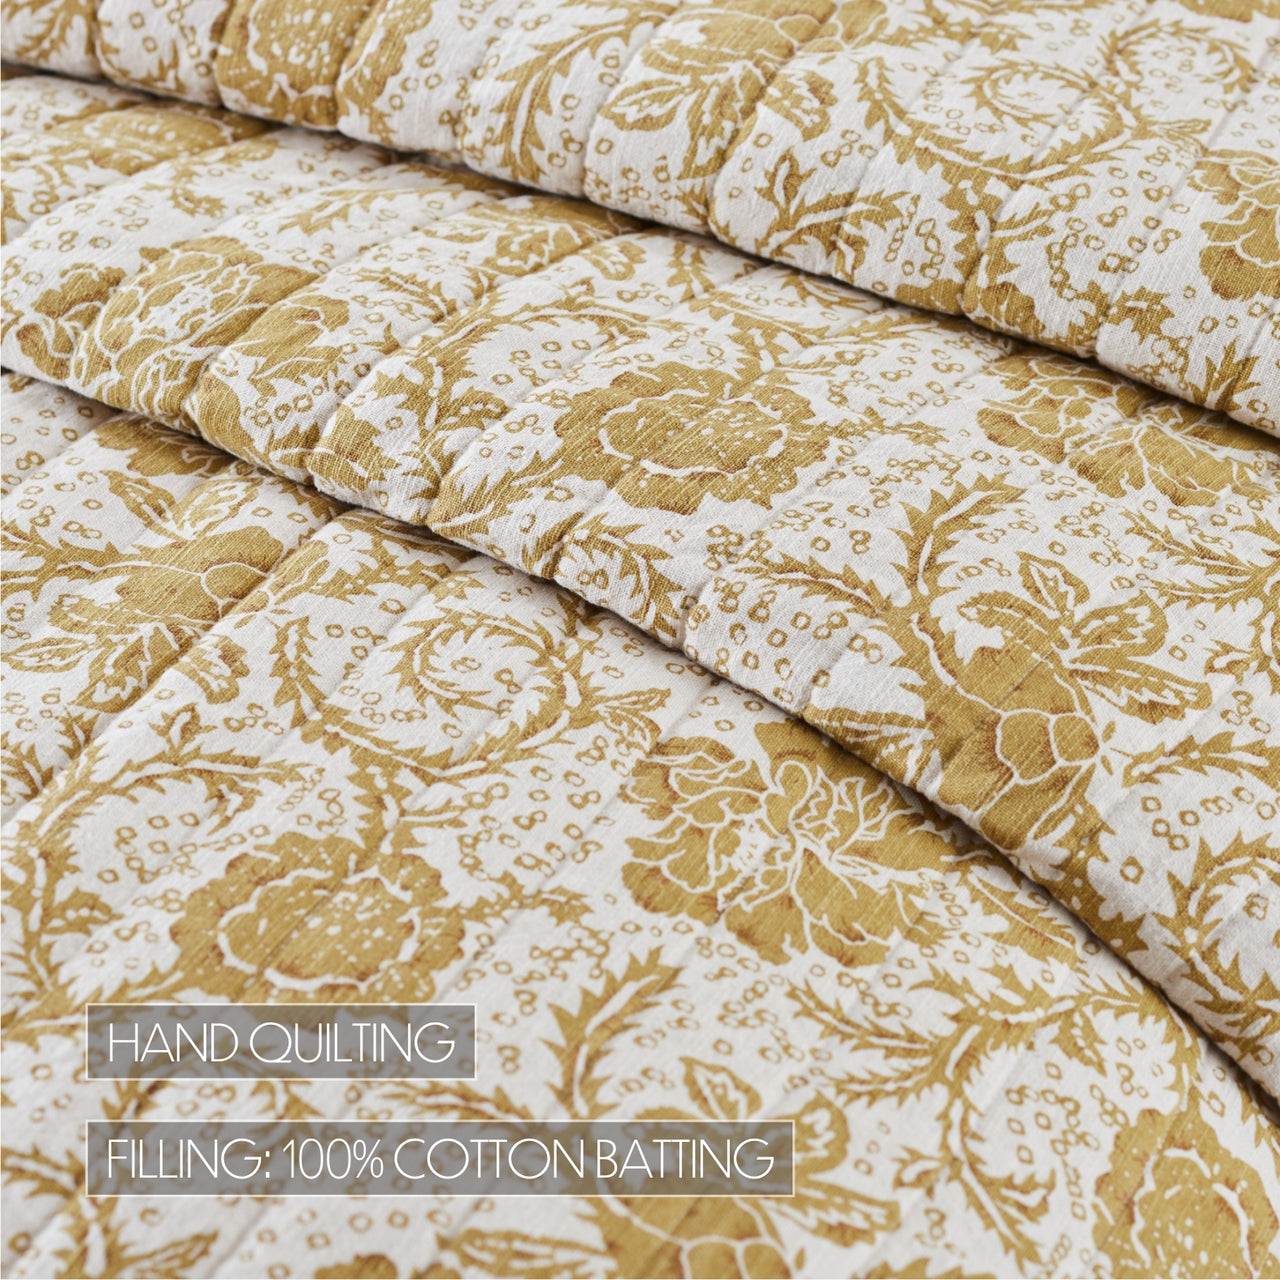 Dorset Gold Floral Luxury King Quilt 120WX105L VHC Brands